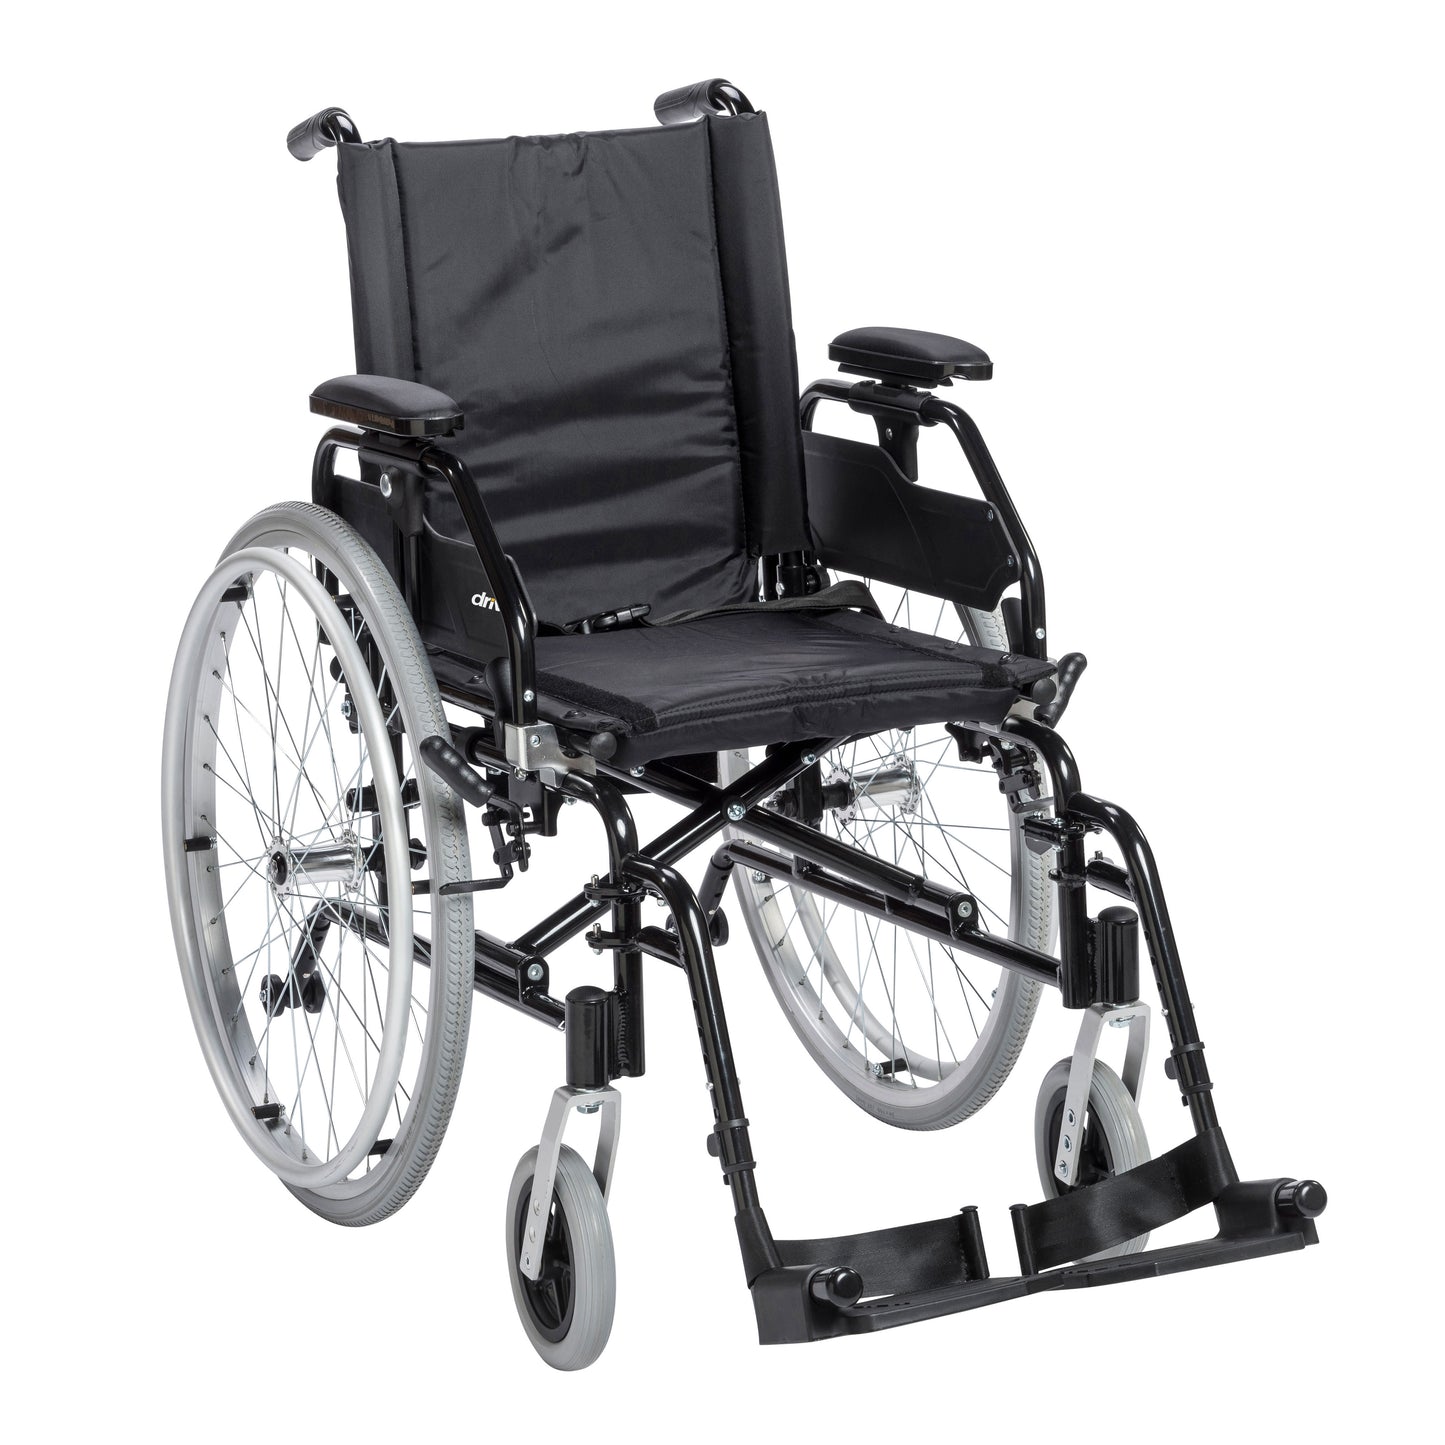 Lynx Ultra Lightweight Wheelchair, Swing away Footrests, 18" Seat